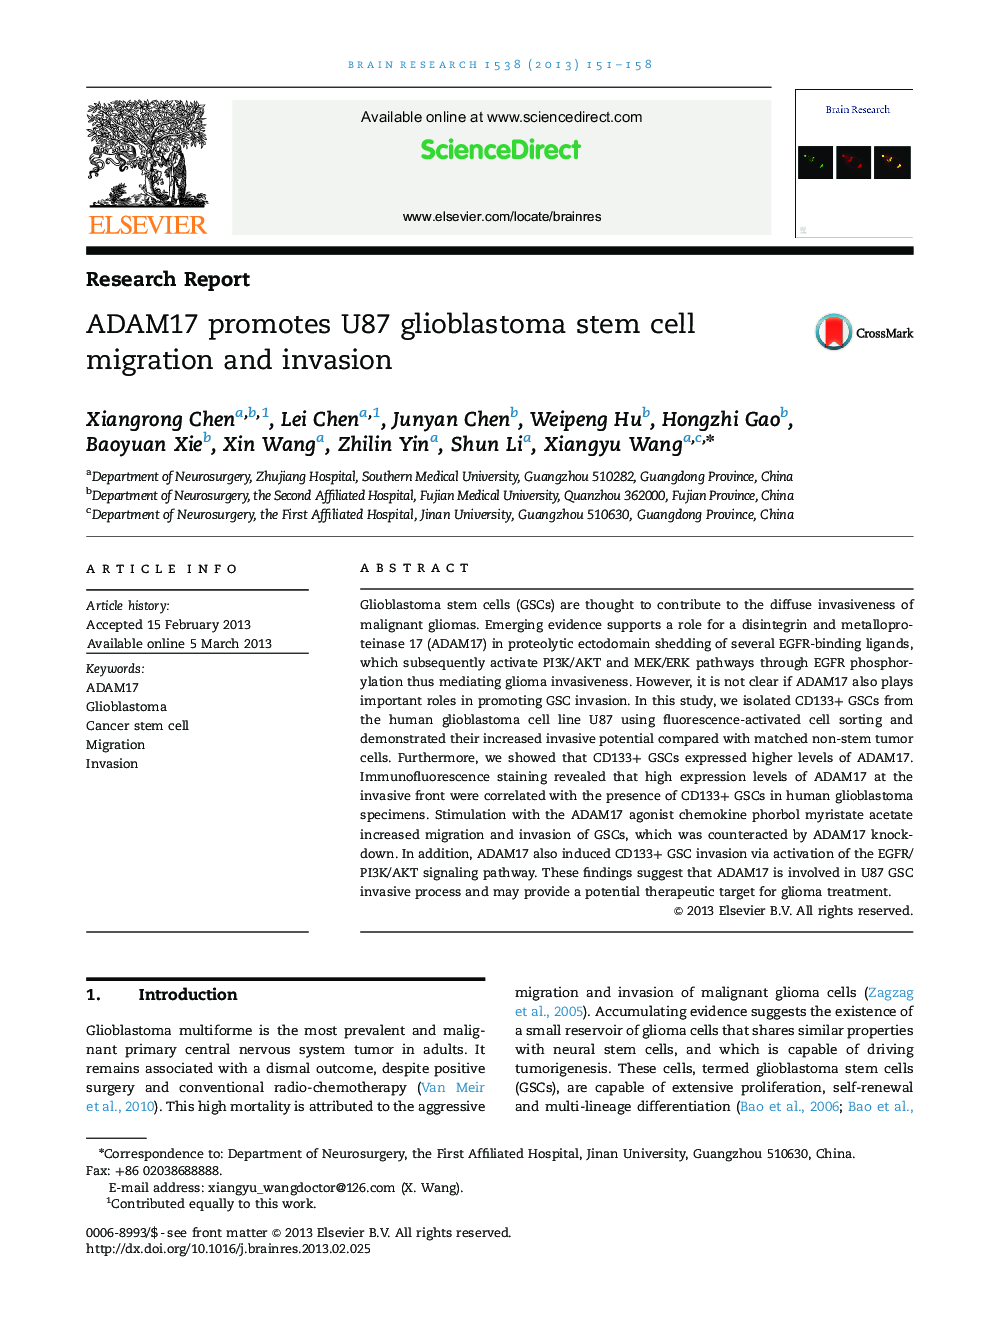 Research ReportADAM17 promotes U87 glioblastoma stem cell migration and invasion